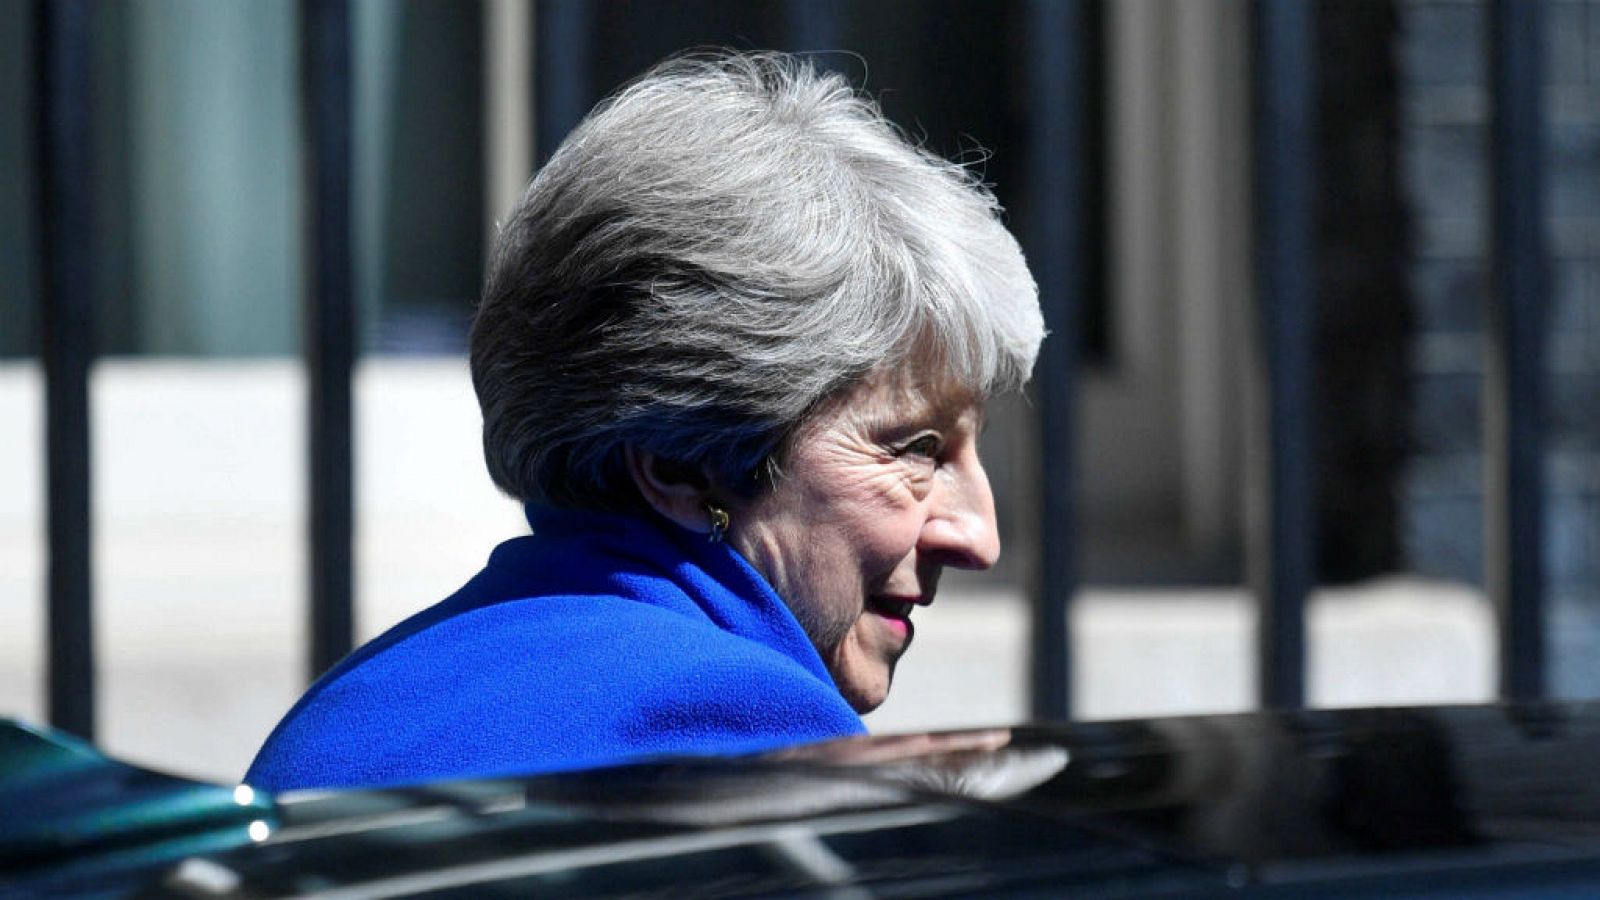  14 horas - Theresa May, tres años de turbulencias en Downing Street - escuchar ahora